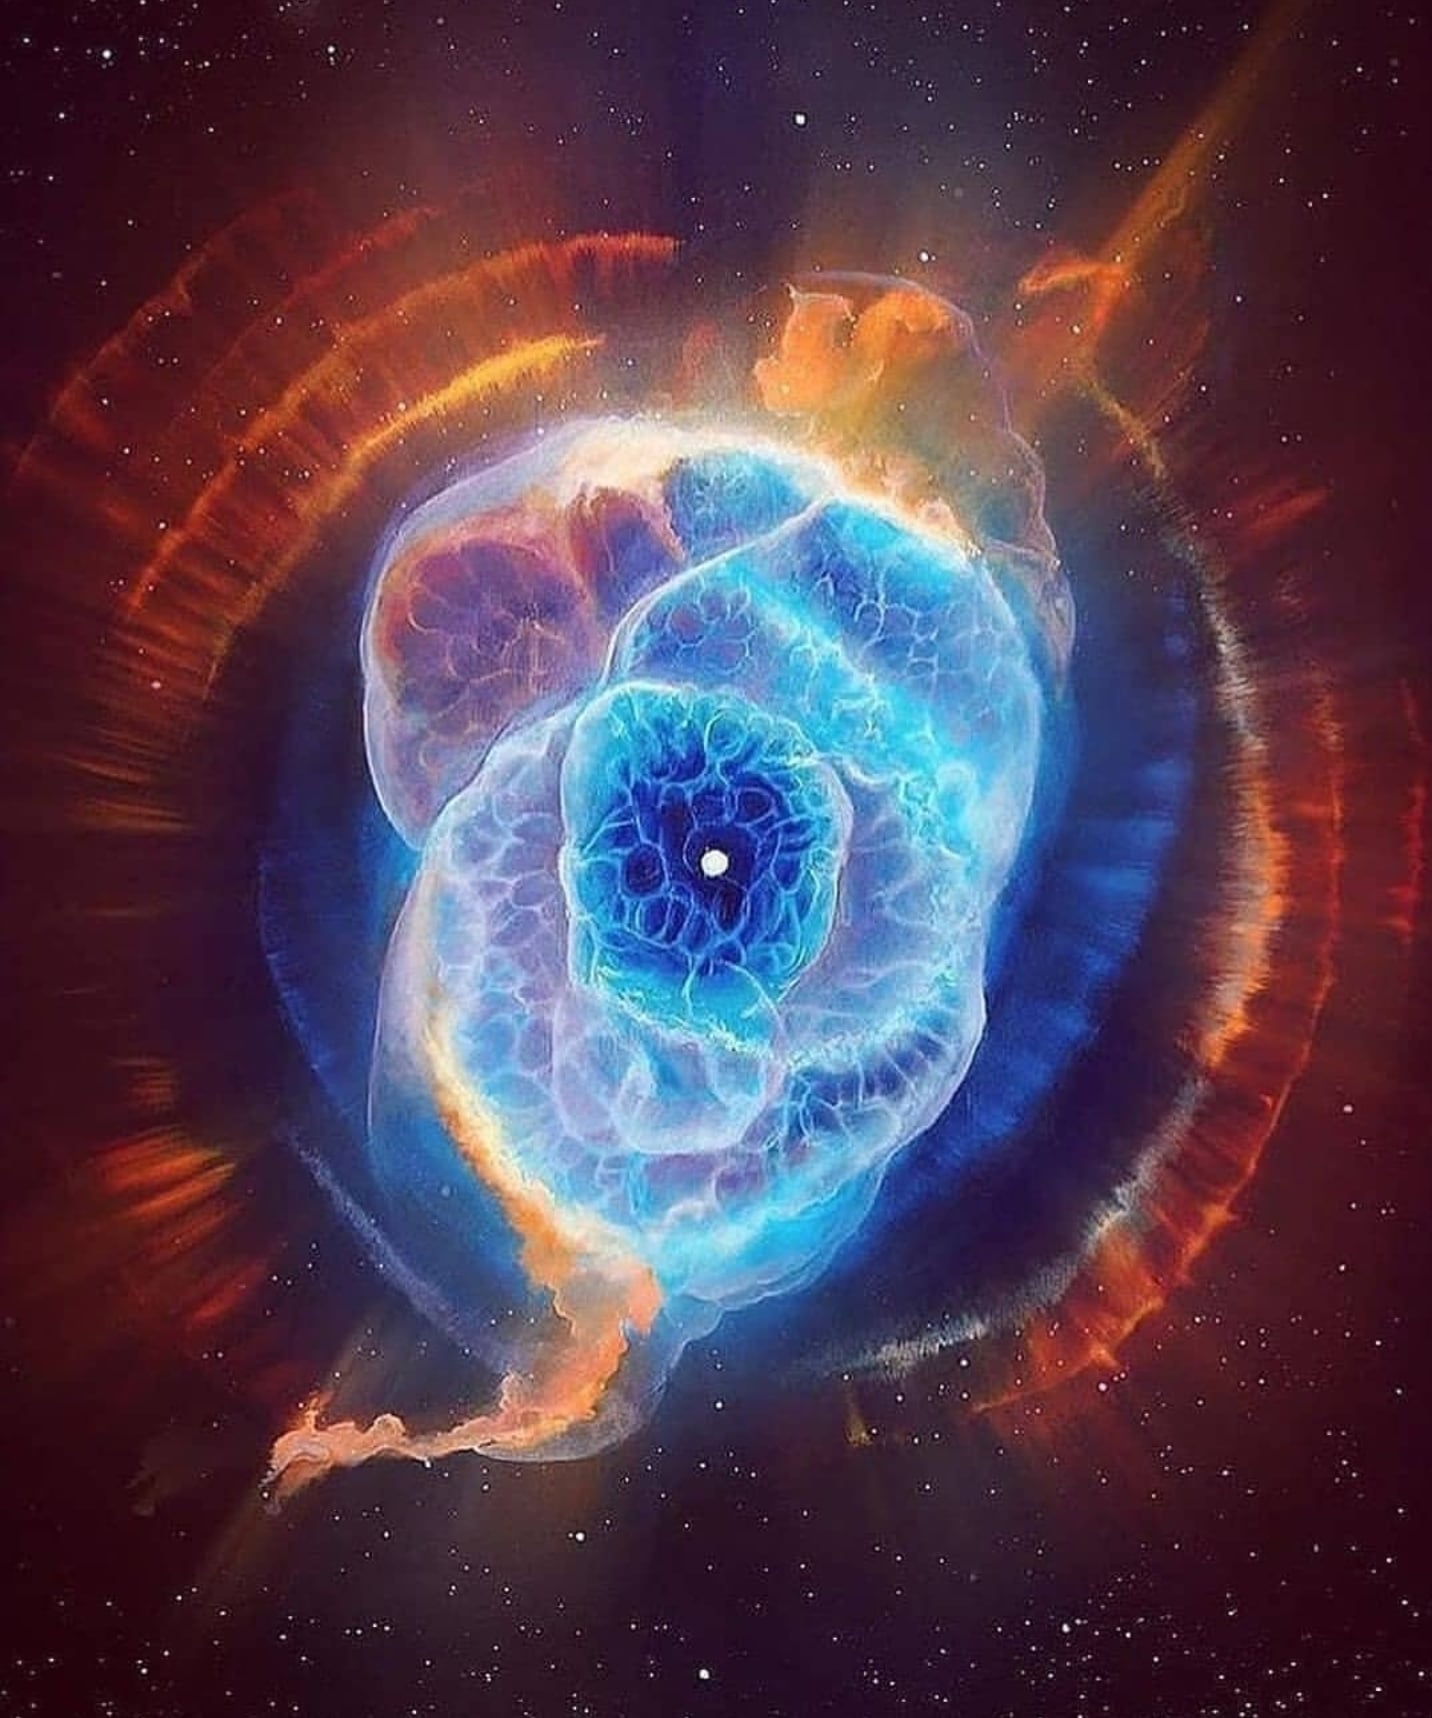 Cat’s Eye nebula in deep space